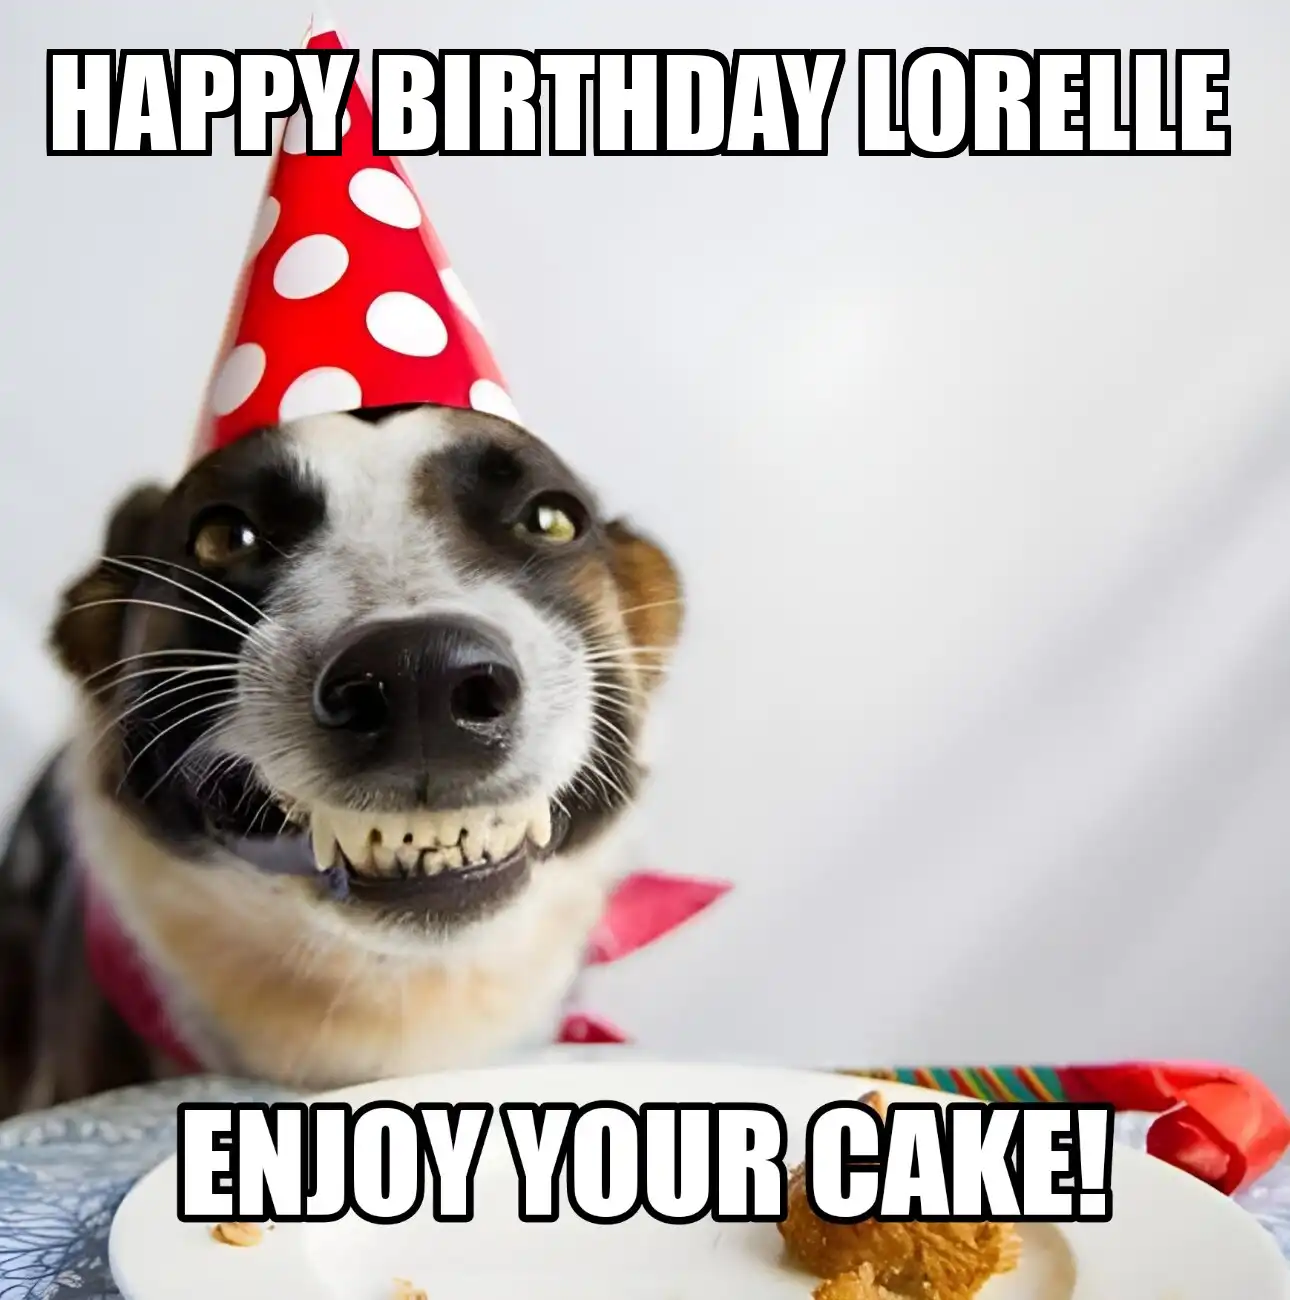 Happy Birthday Lorelle Enjoy Your Cake Dog Meme